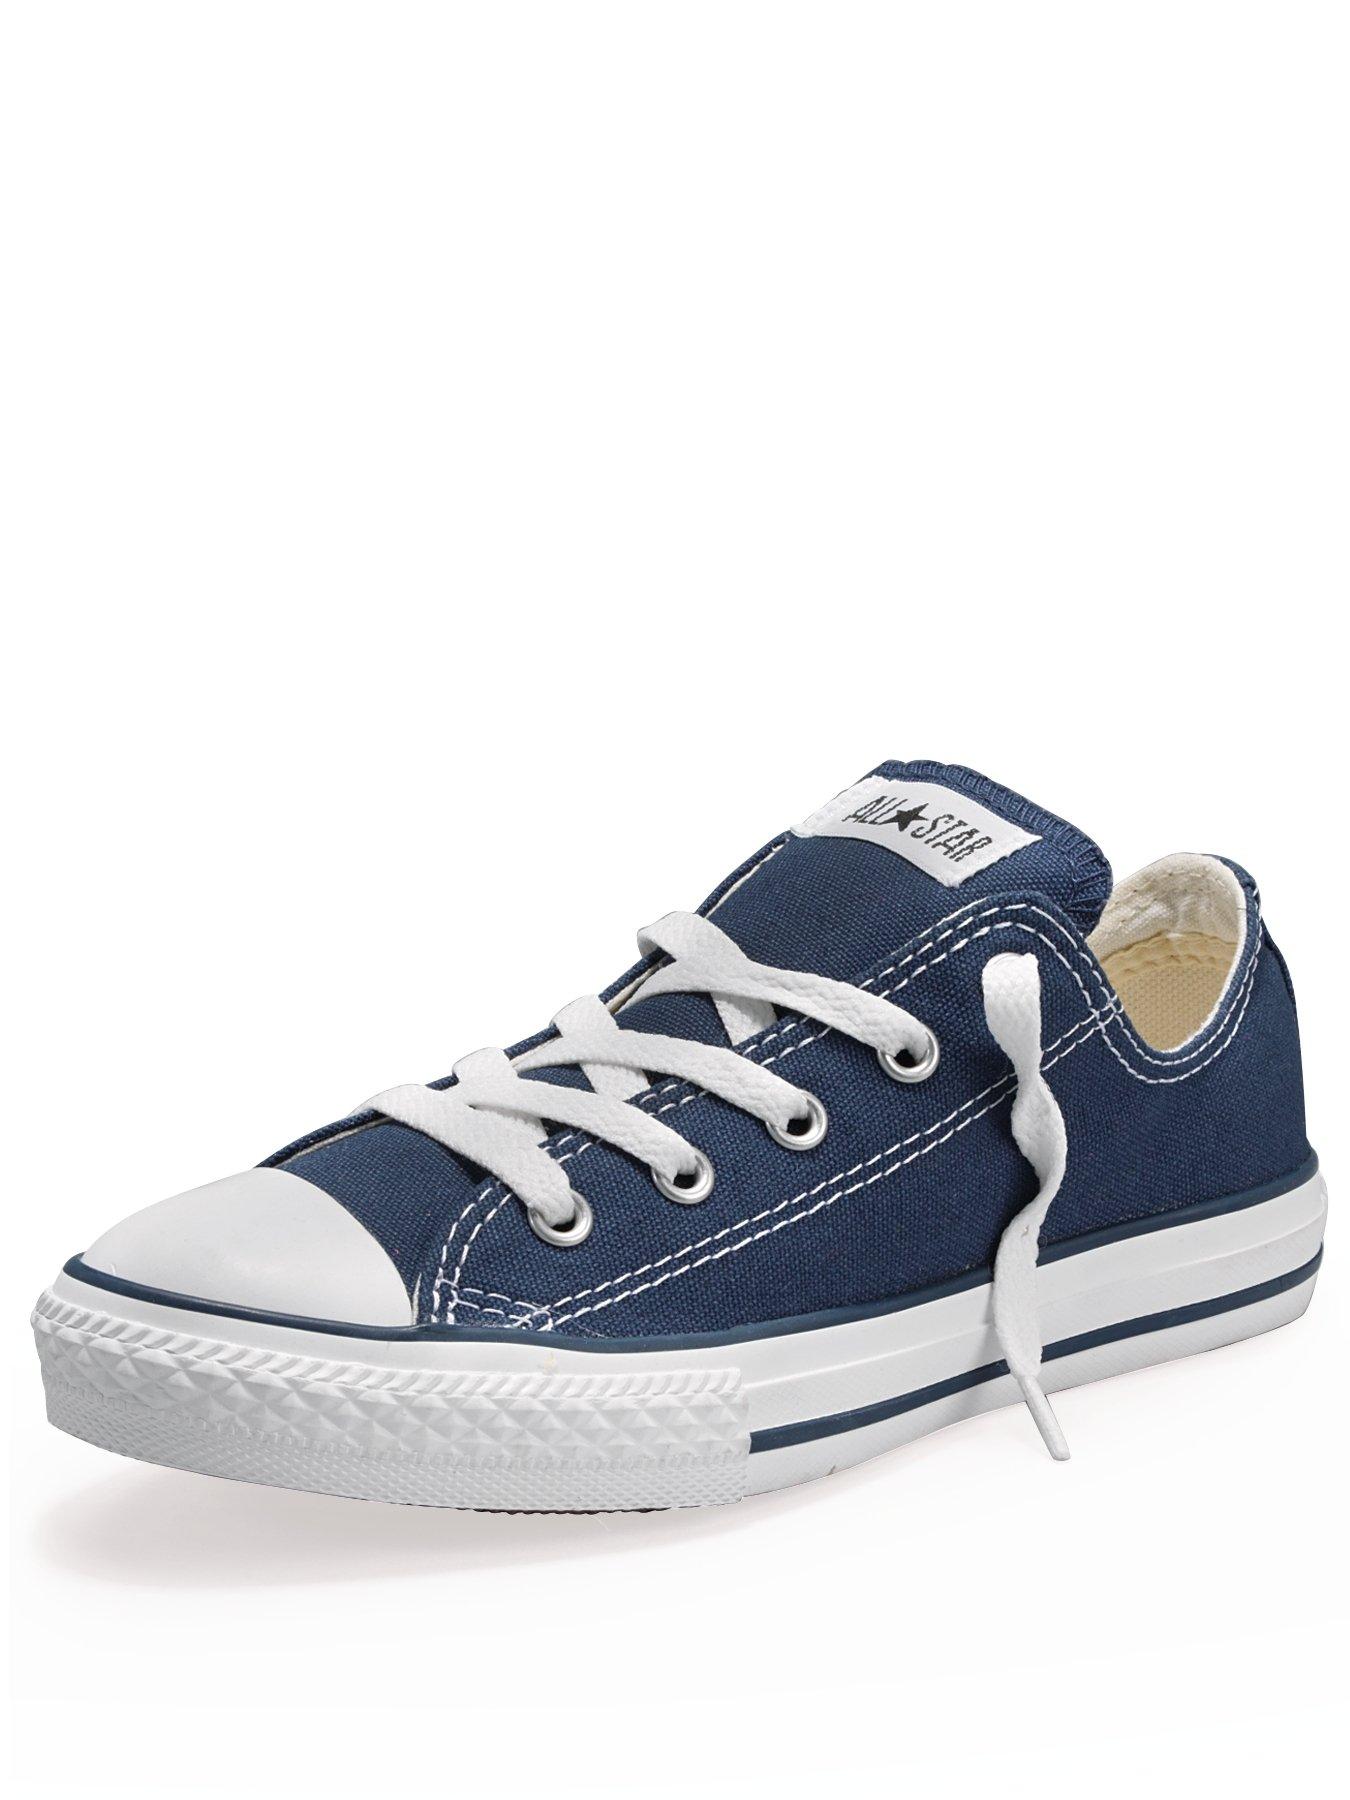 Converse Kids \u0026 Baby Shoes \u0026 Clothing 